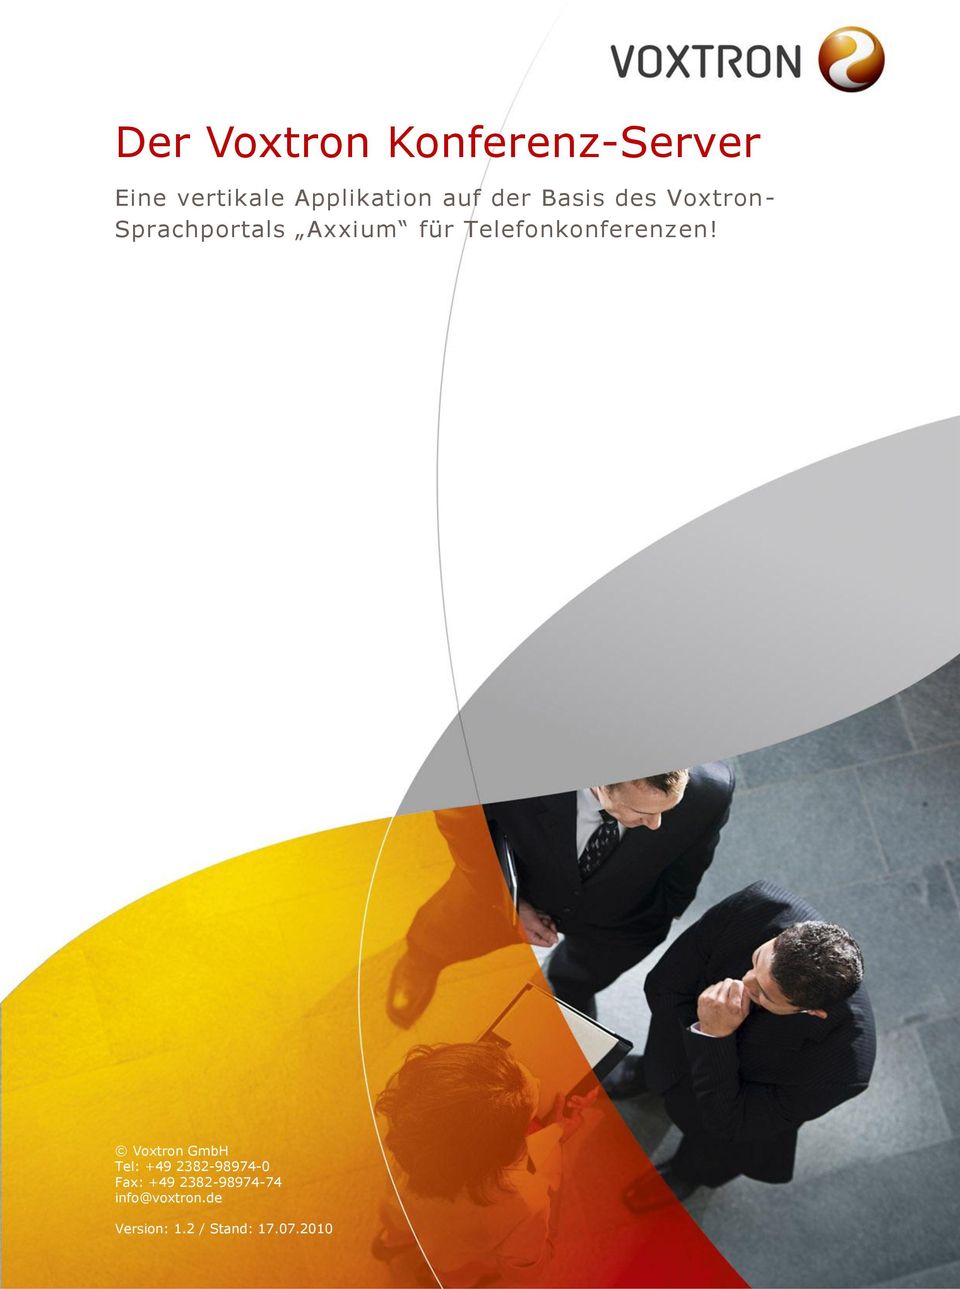 Voxtron GmbH Tel: +49 2382-98974-0 Fax: +49 2382-98974-74